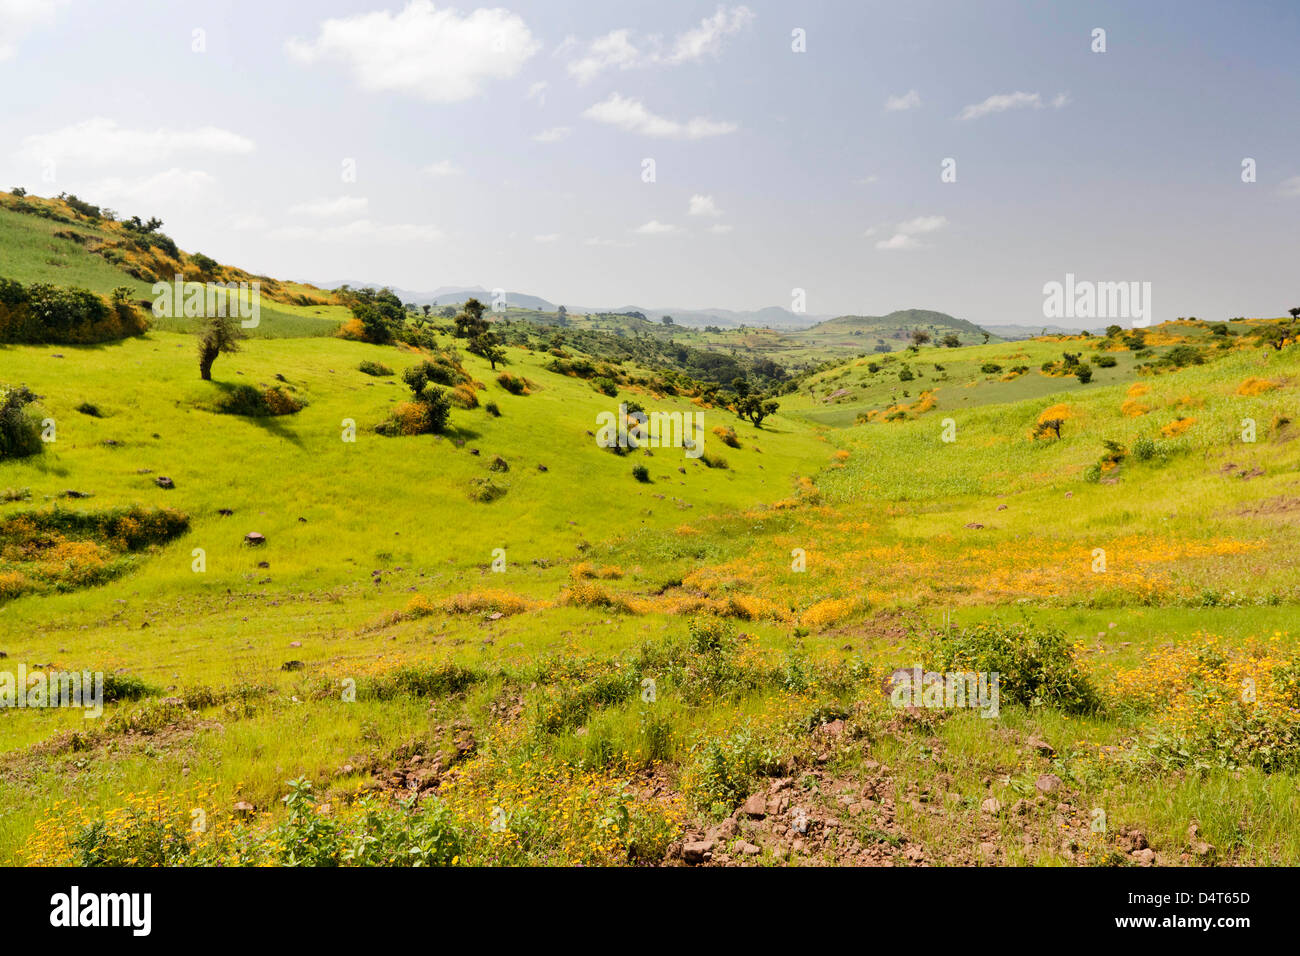 Landscape between Gonder and Lake Tana, Ethiopia Stock Photo